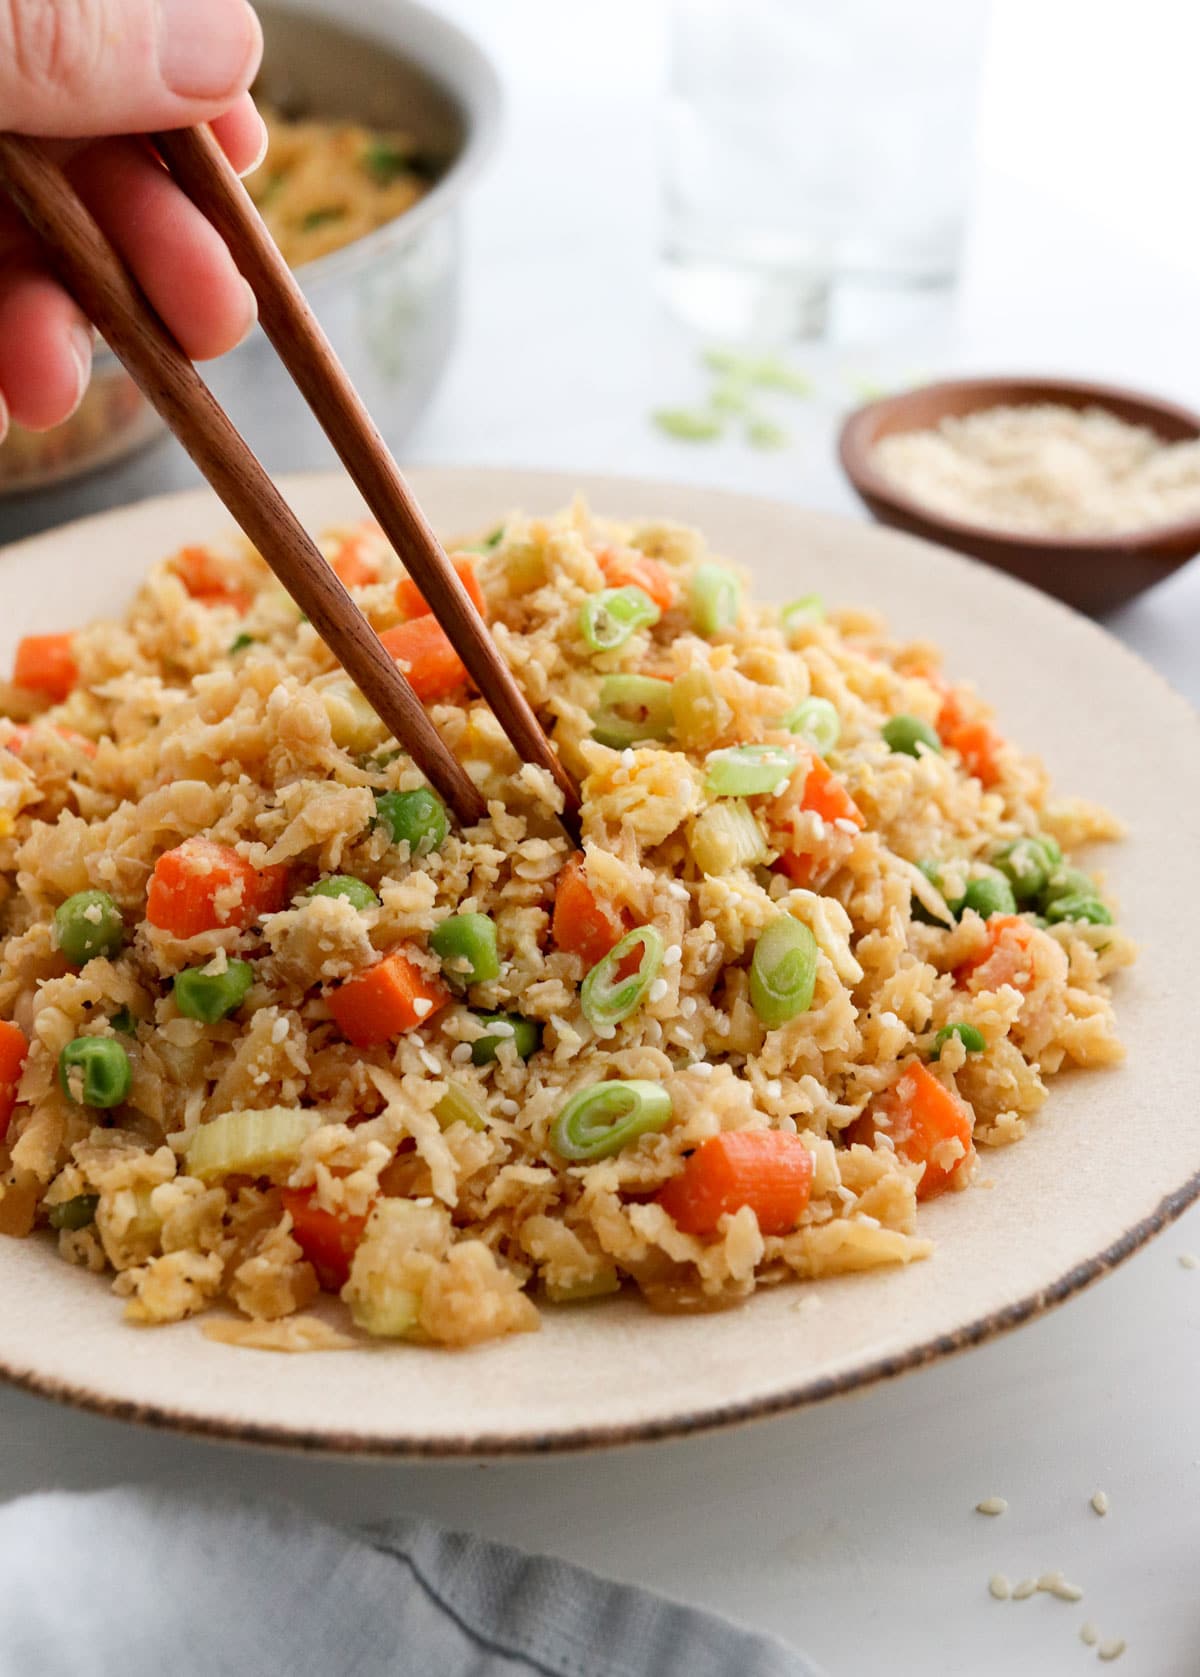 cauliflower rice served with chopsticks.